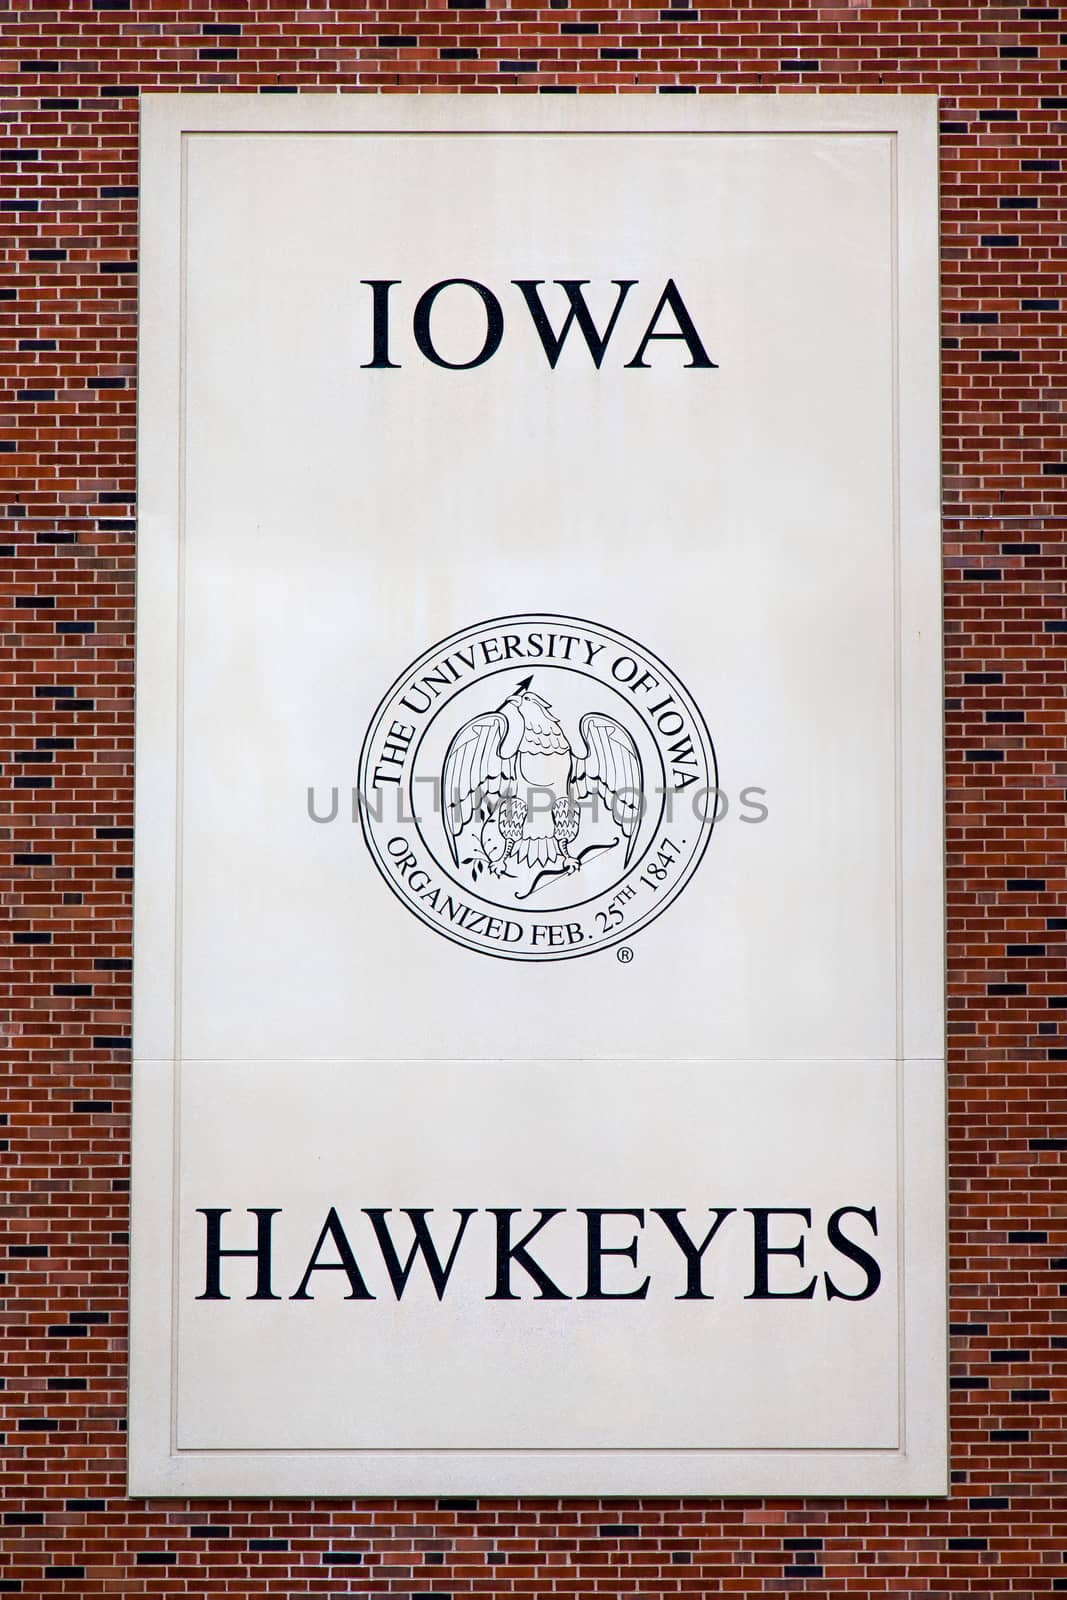 IOWA CITY, IA/USA - AUGUST 7, 2015: Iowa Hawkeyes emblem and seal at Kinnick Stadium at the University of Iowa. The University of Iowa is a flagship public research university.